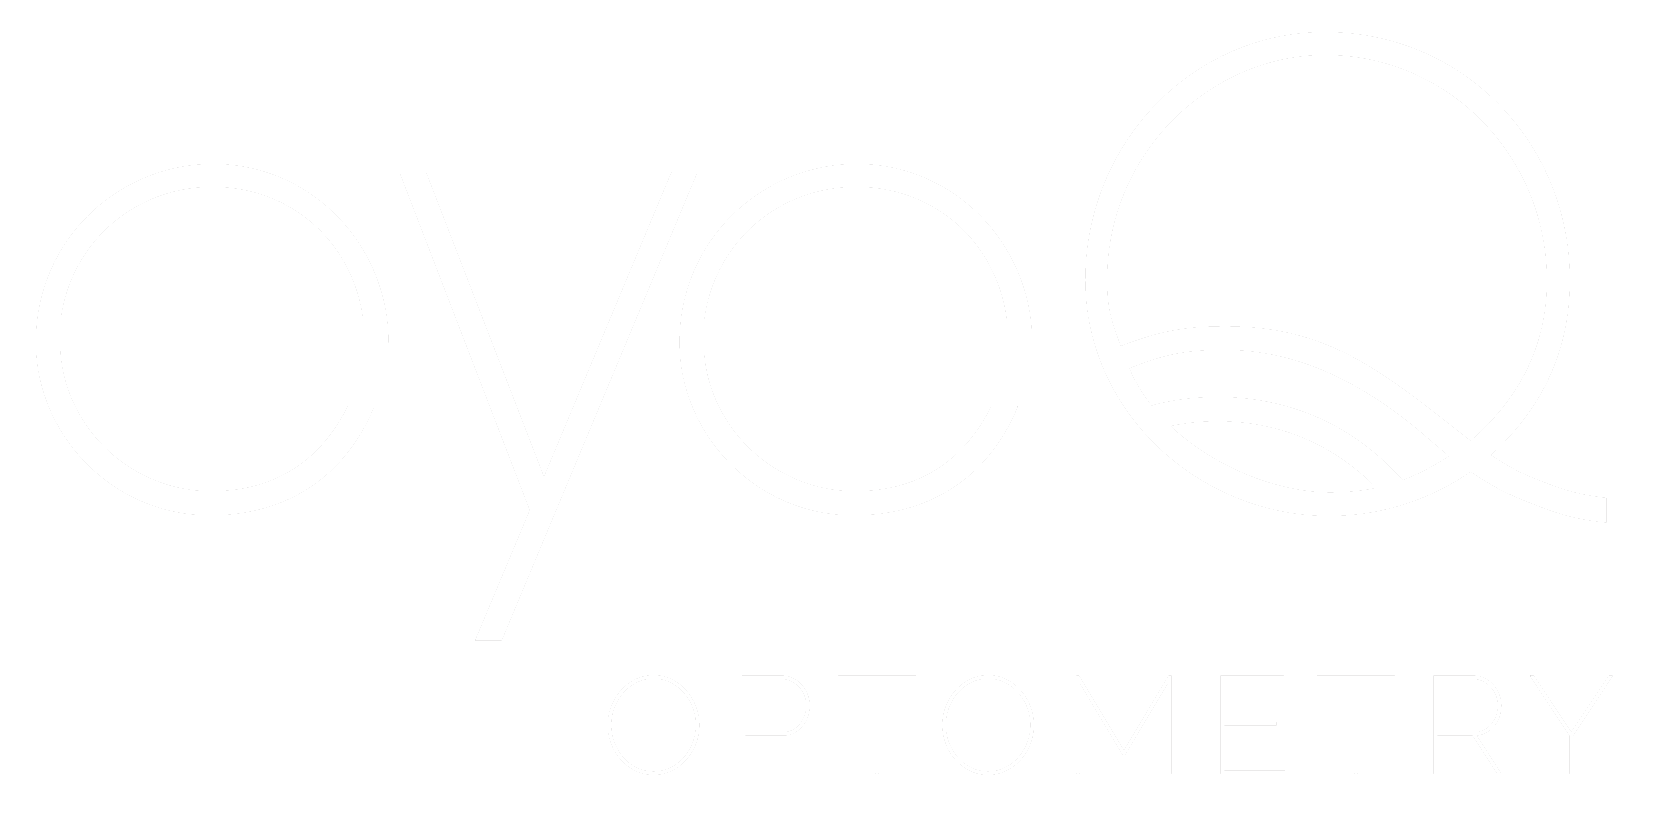 EyeQ Optometry logo in white